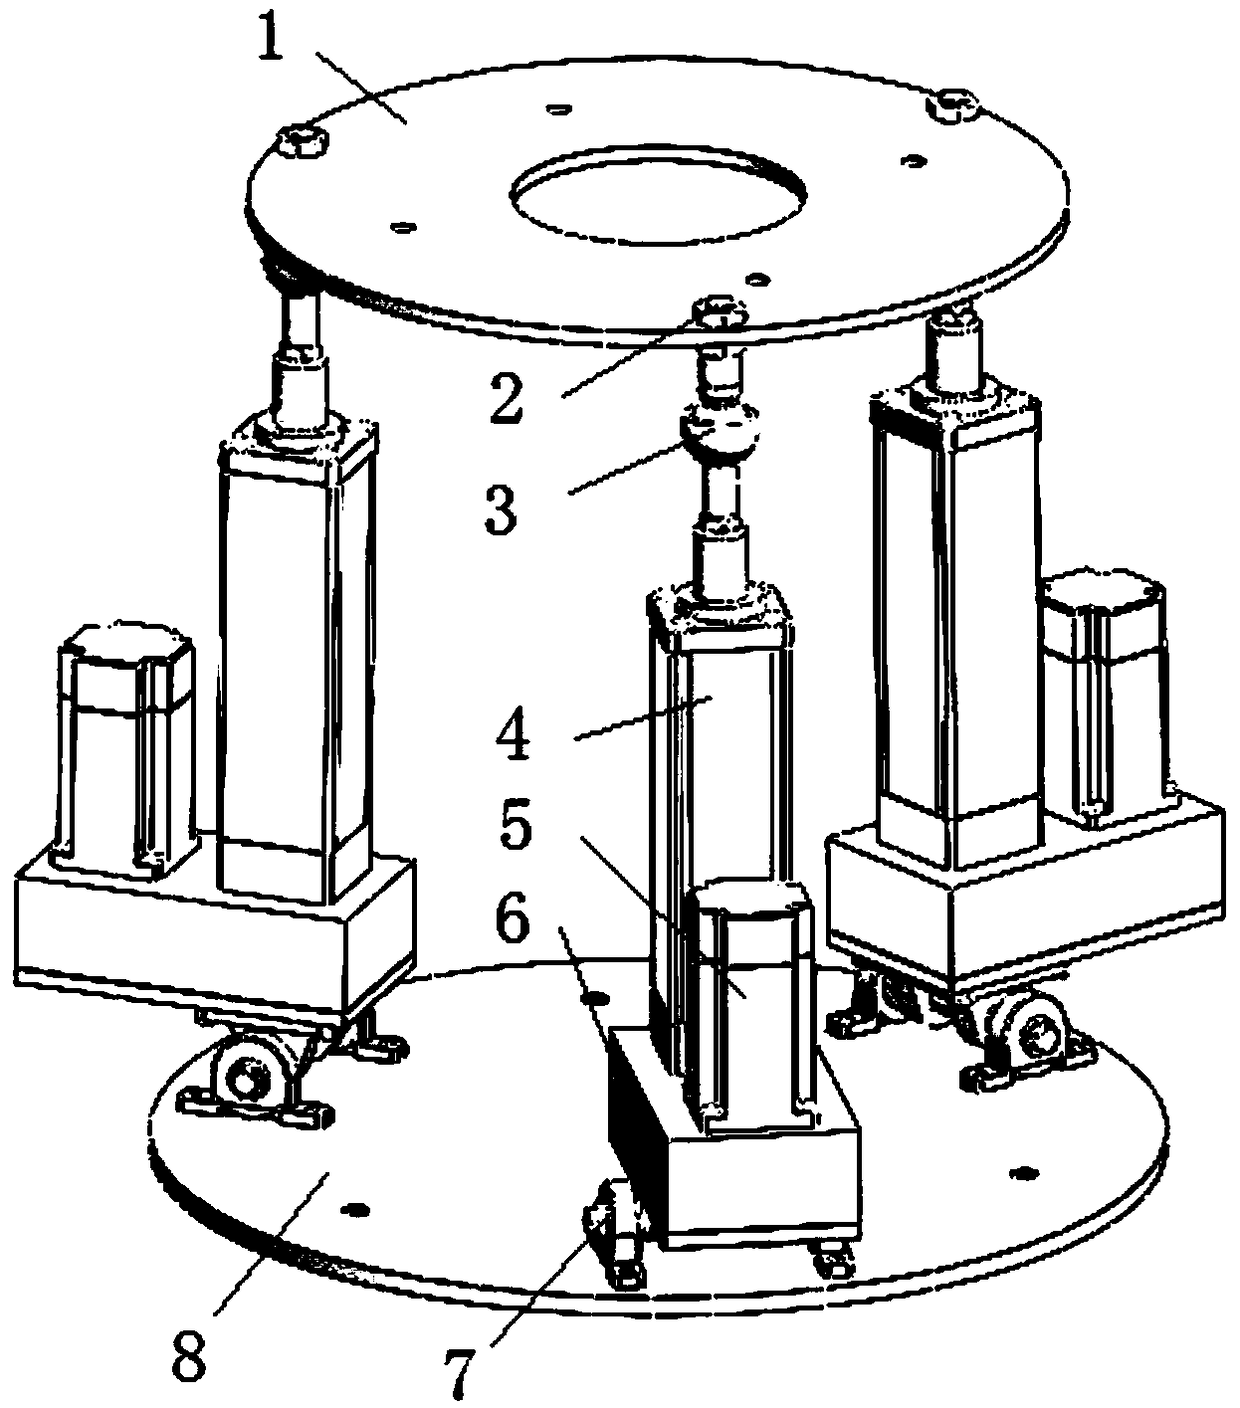 Three-freedom-degree parallel mechanism control method